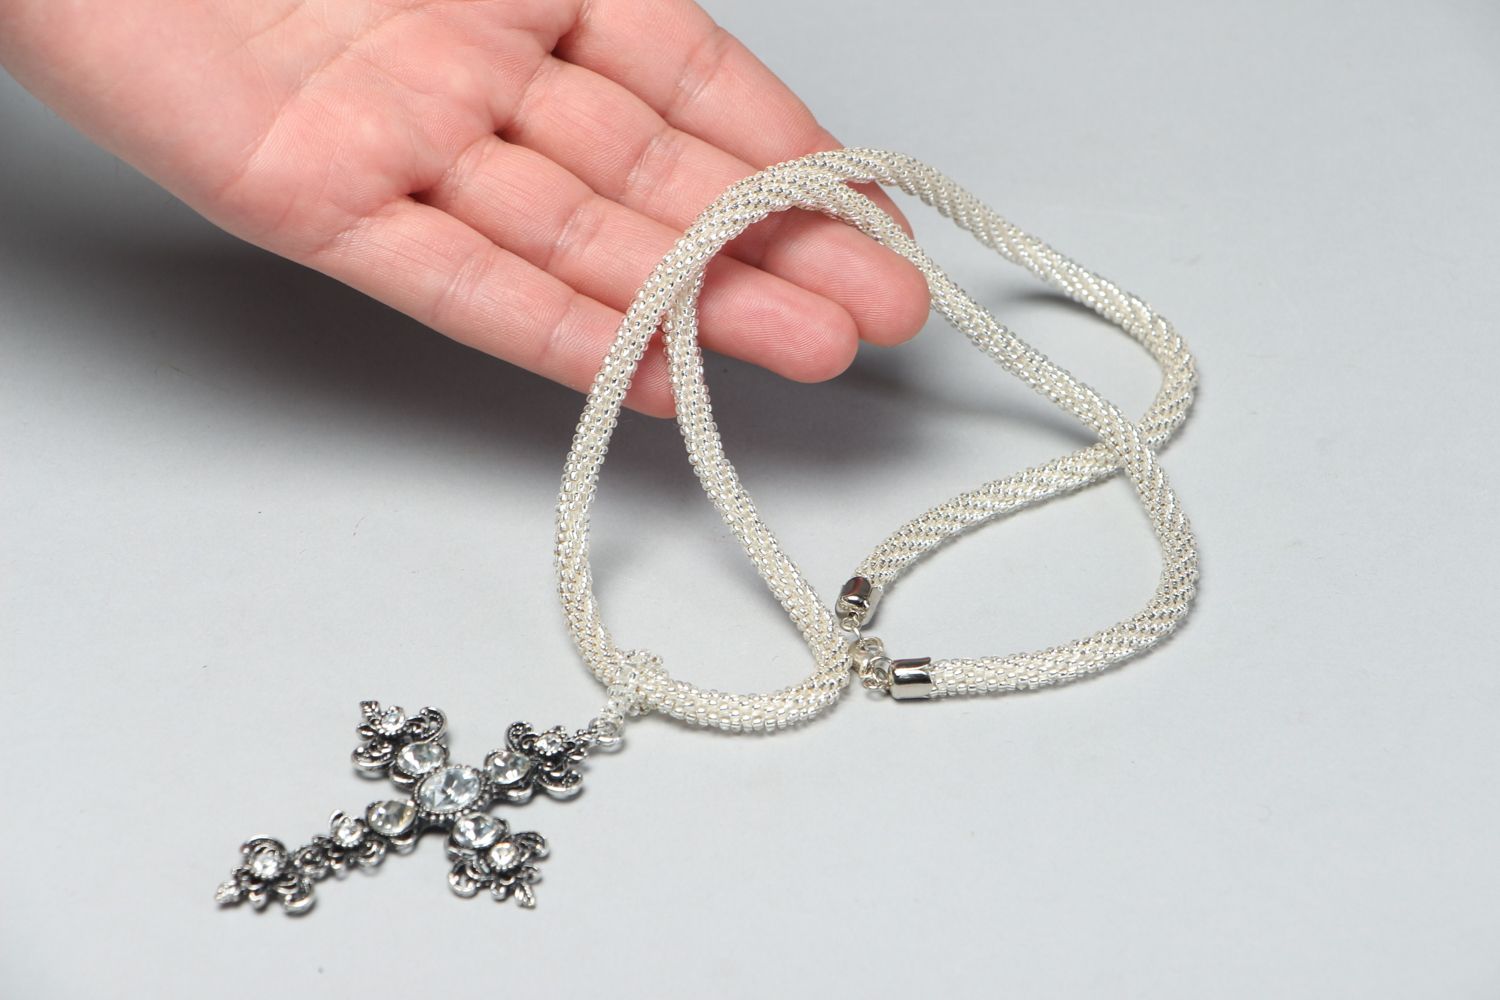 Beaded rosary neck jewelry photo 4